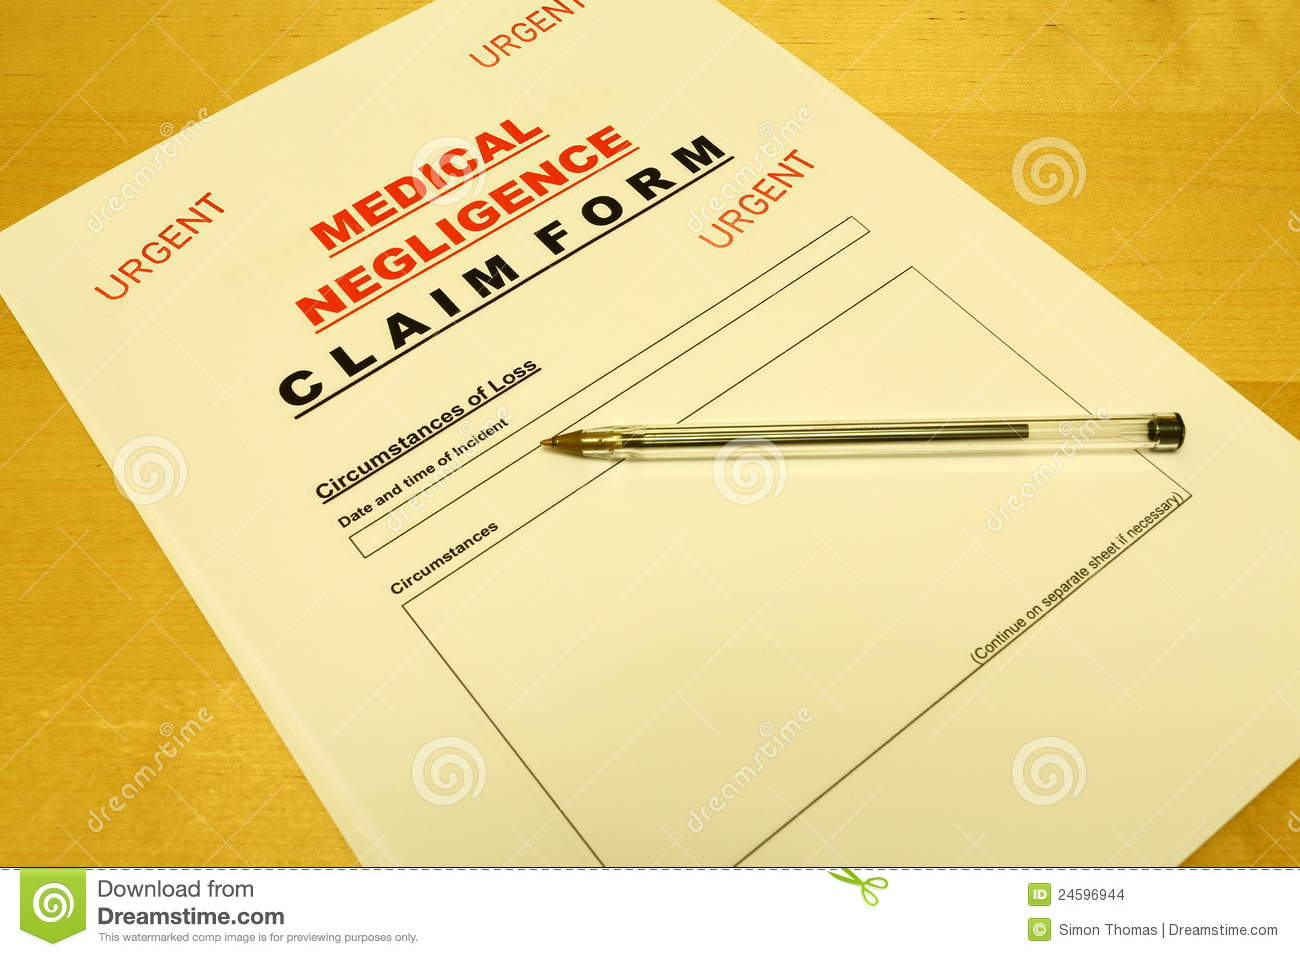 Medical Negligence Claim Form Stock Photo Image Of Healthcare Injury